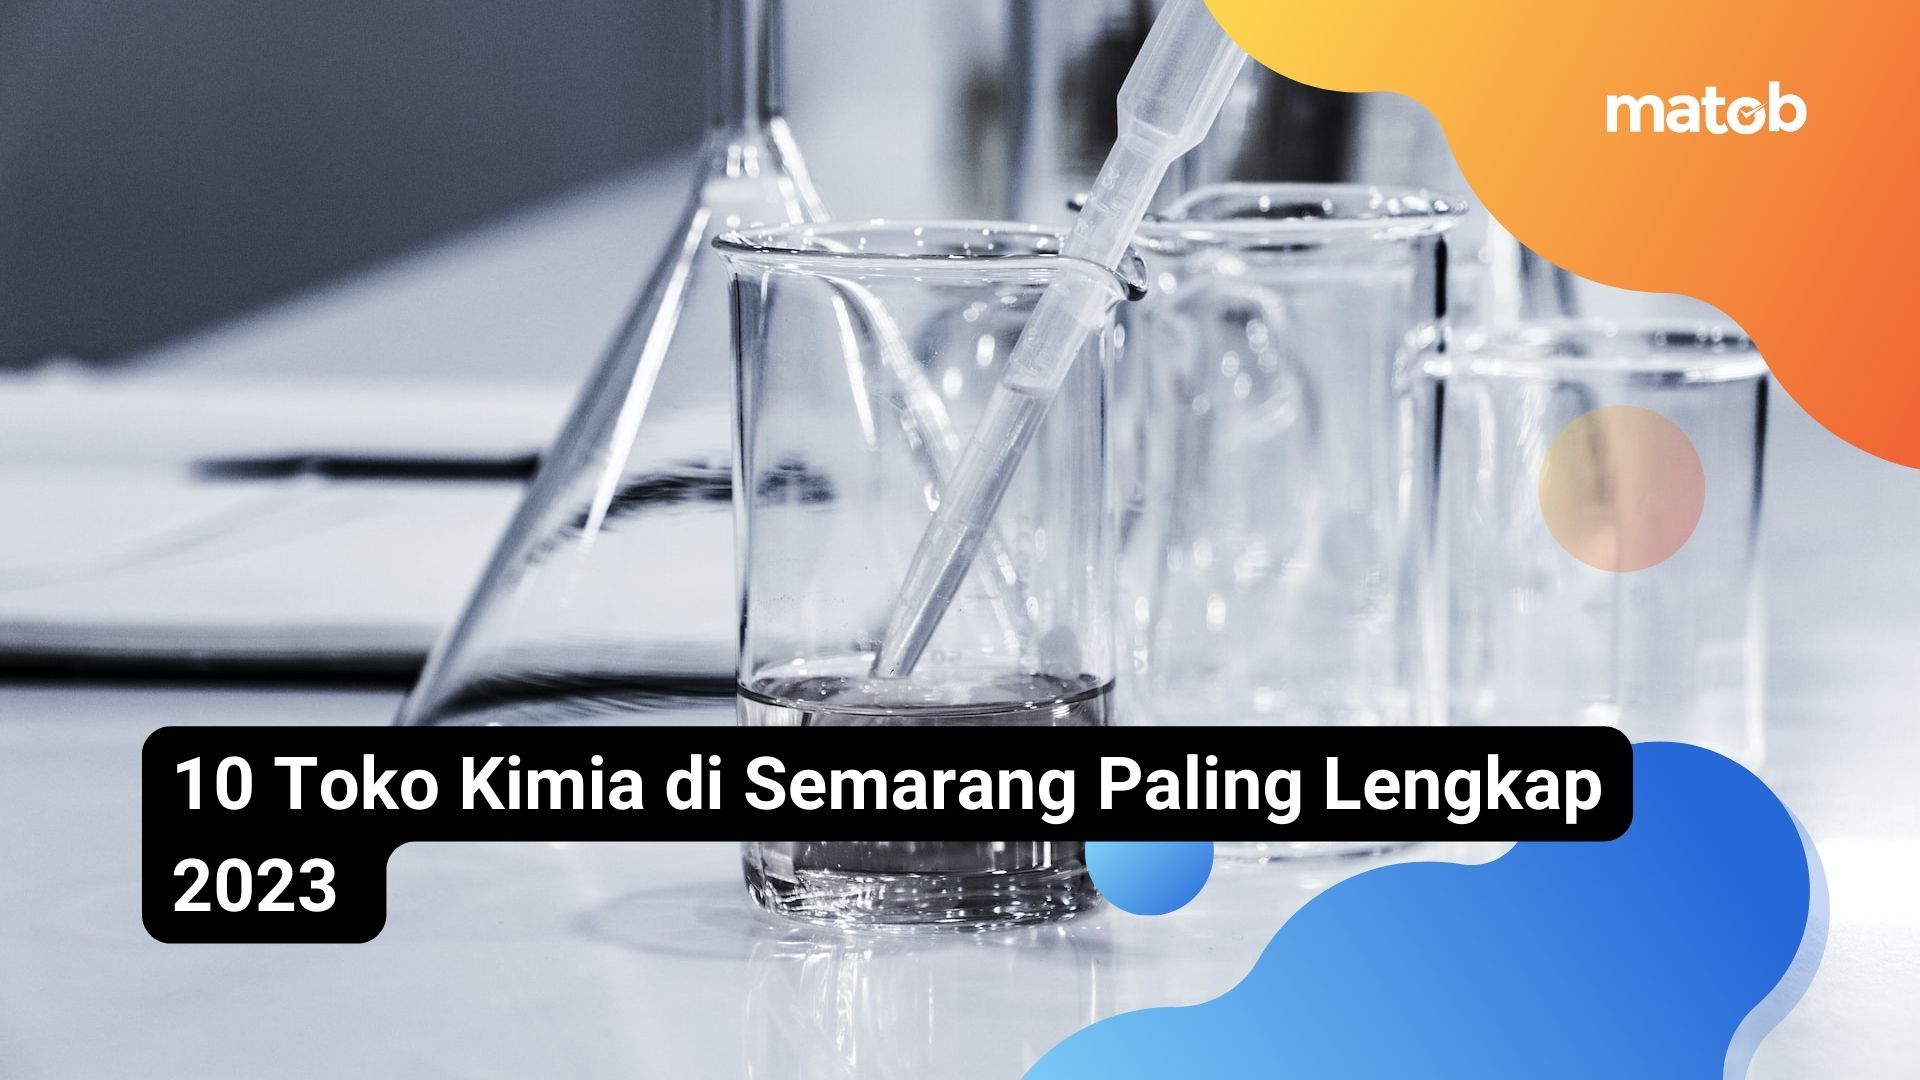 10 Toko Kimia di Semarang Paling Lengkap 2023